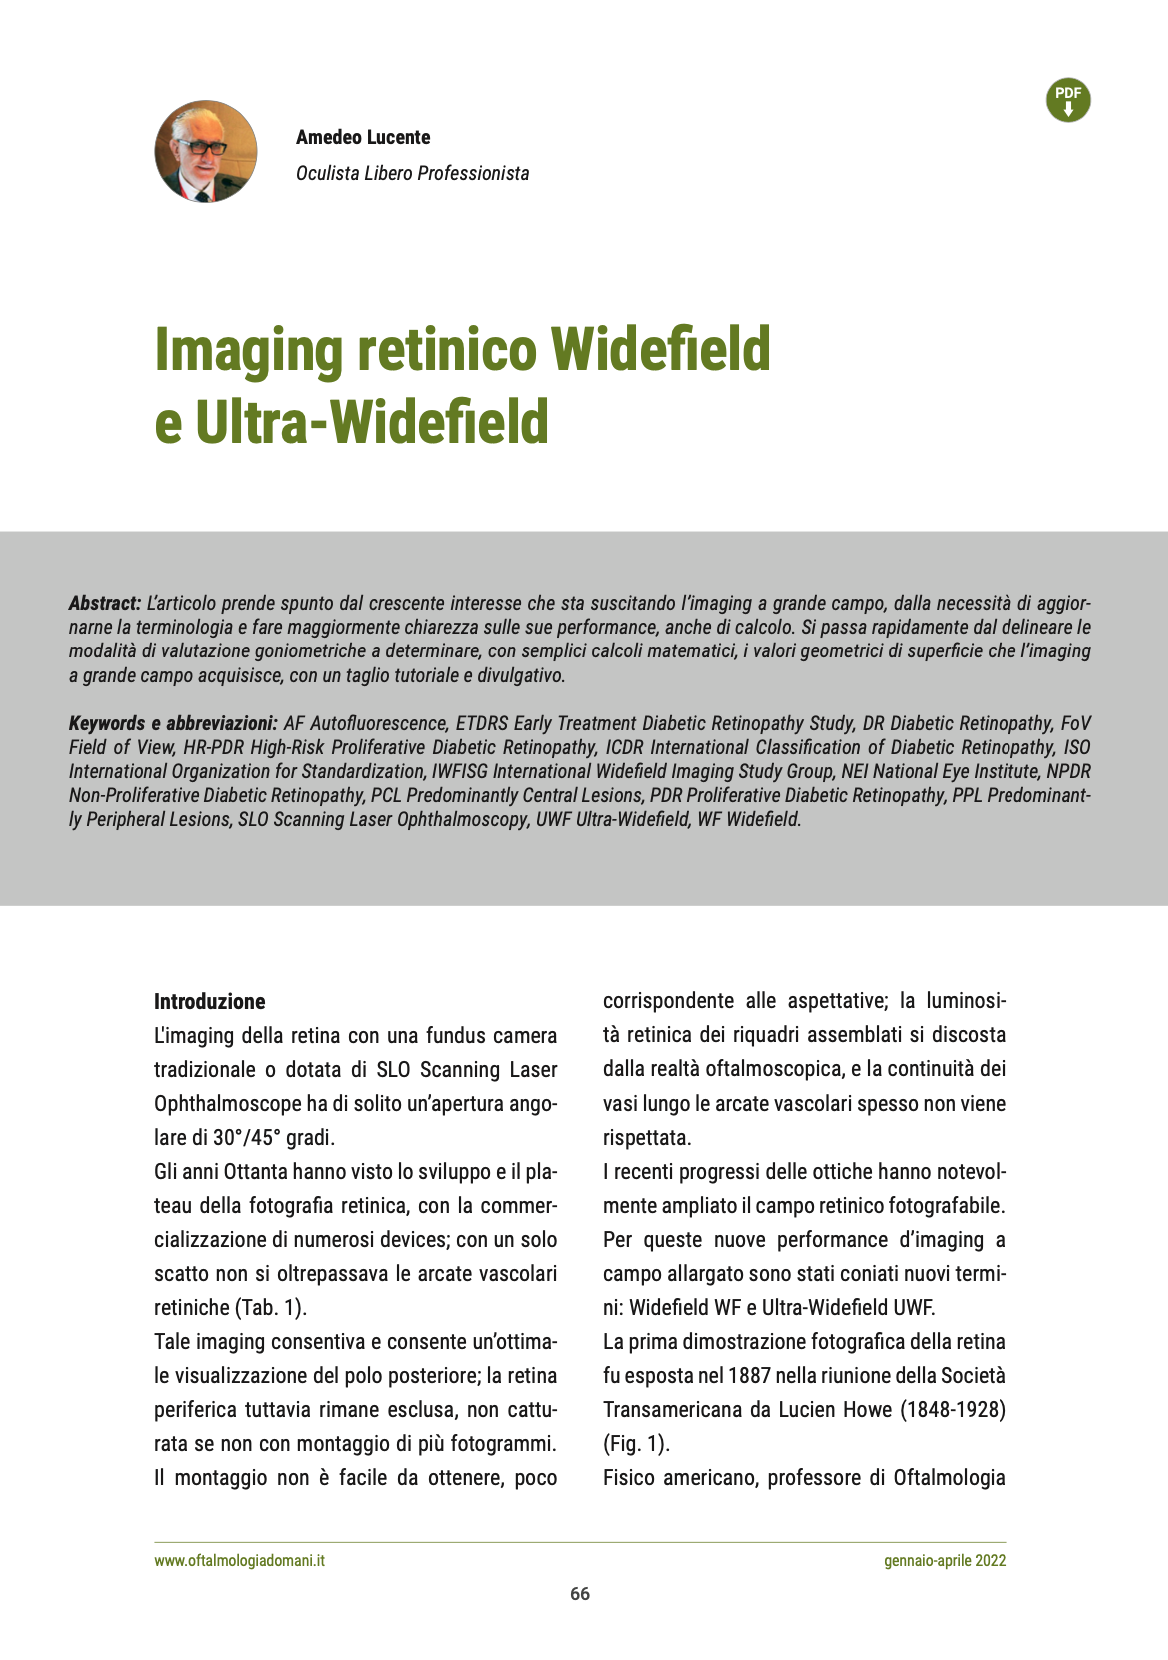 Imaging retinico Widefield e Ultra-Widefield